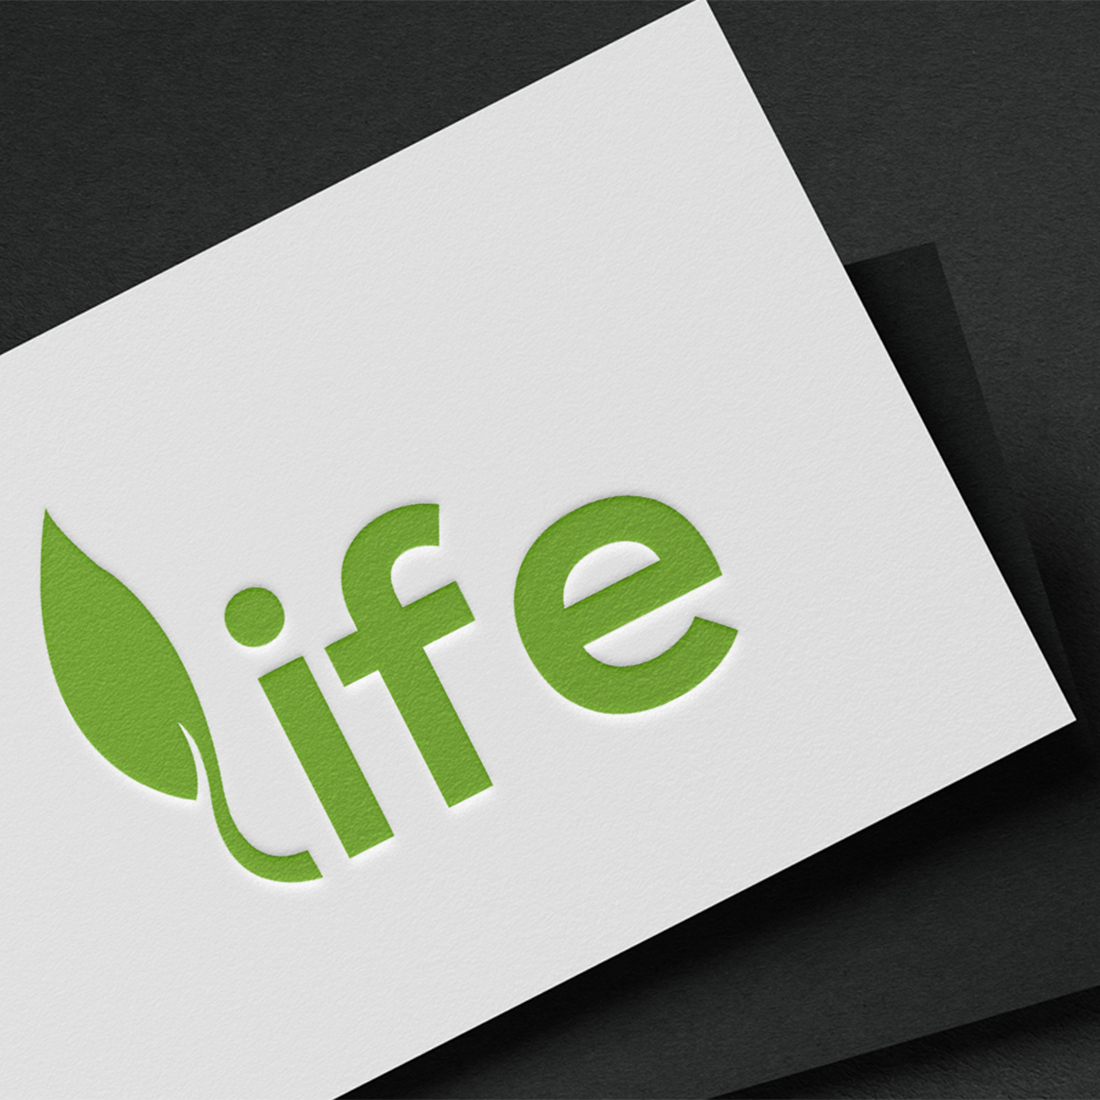 Life Logo Design Template cover image.